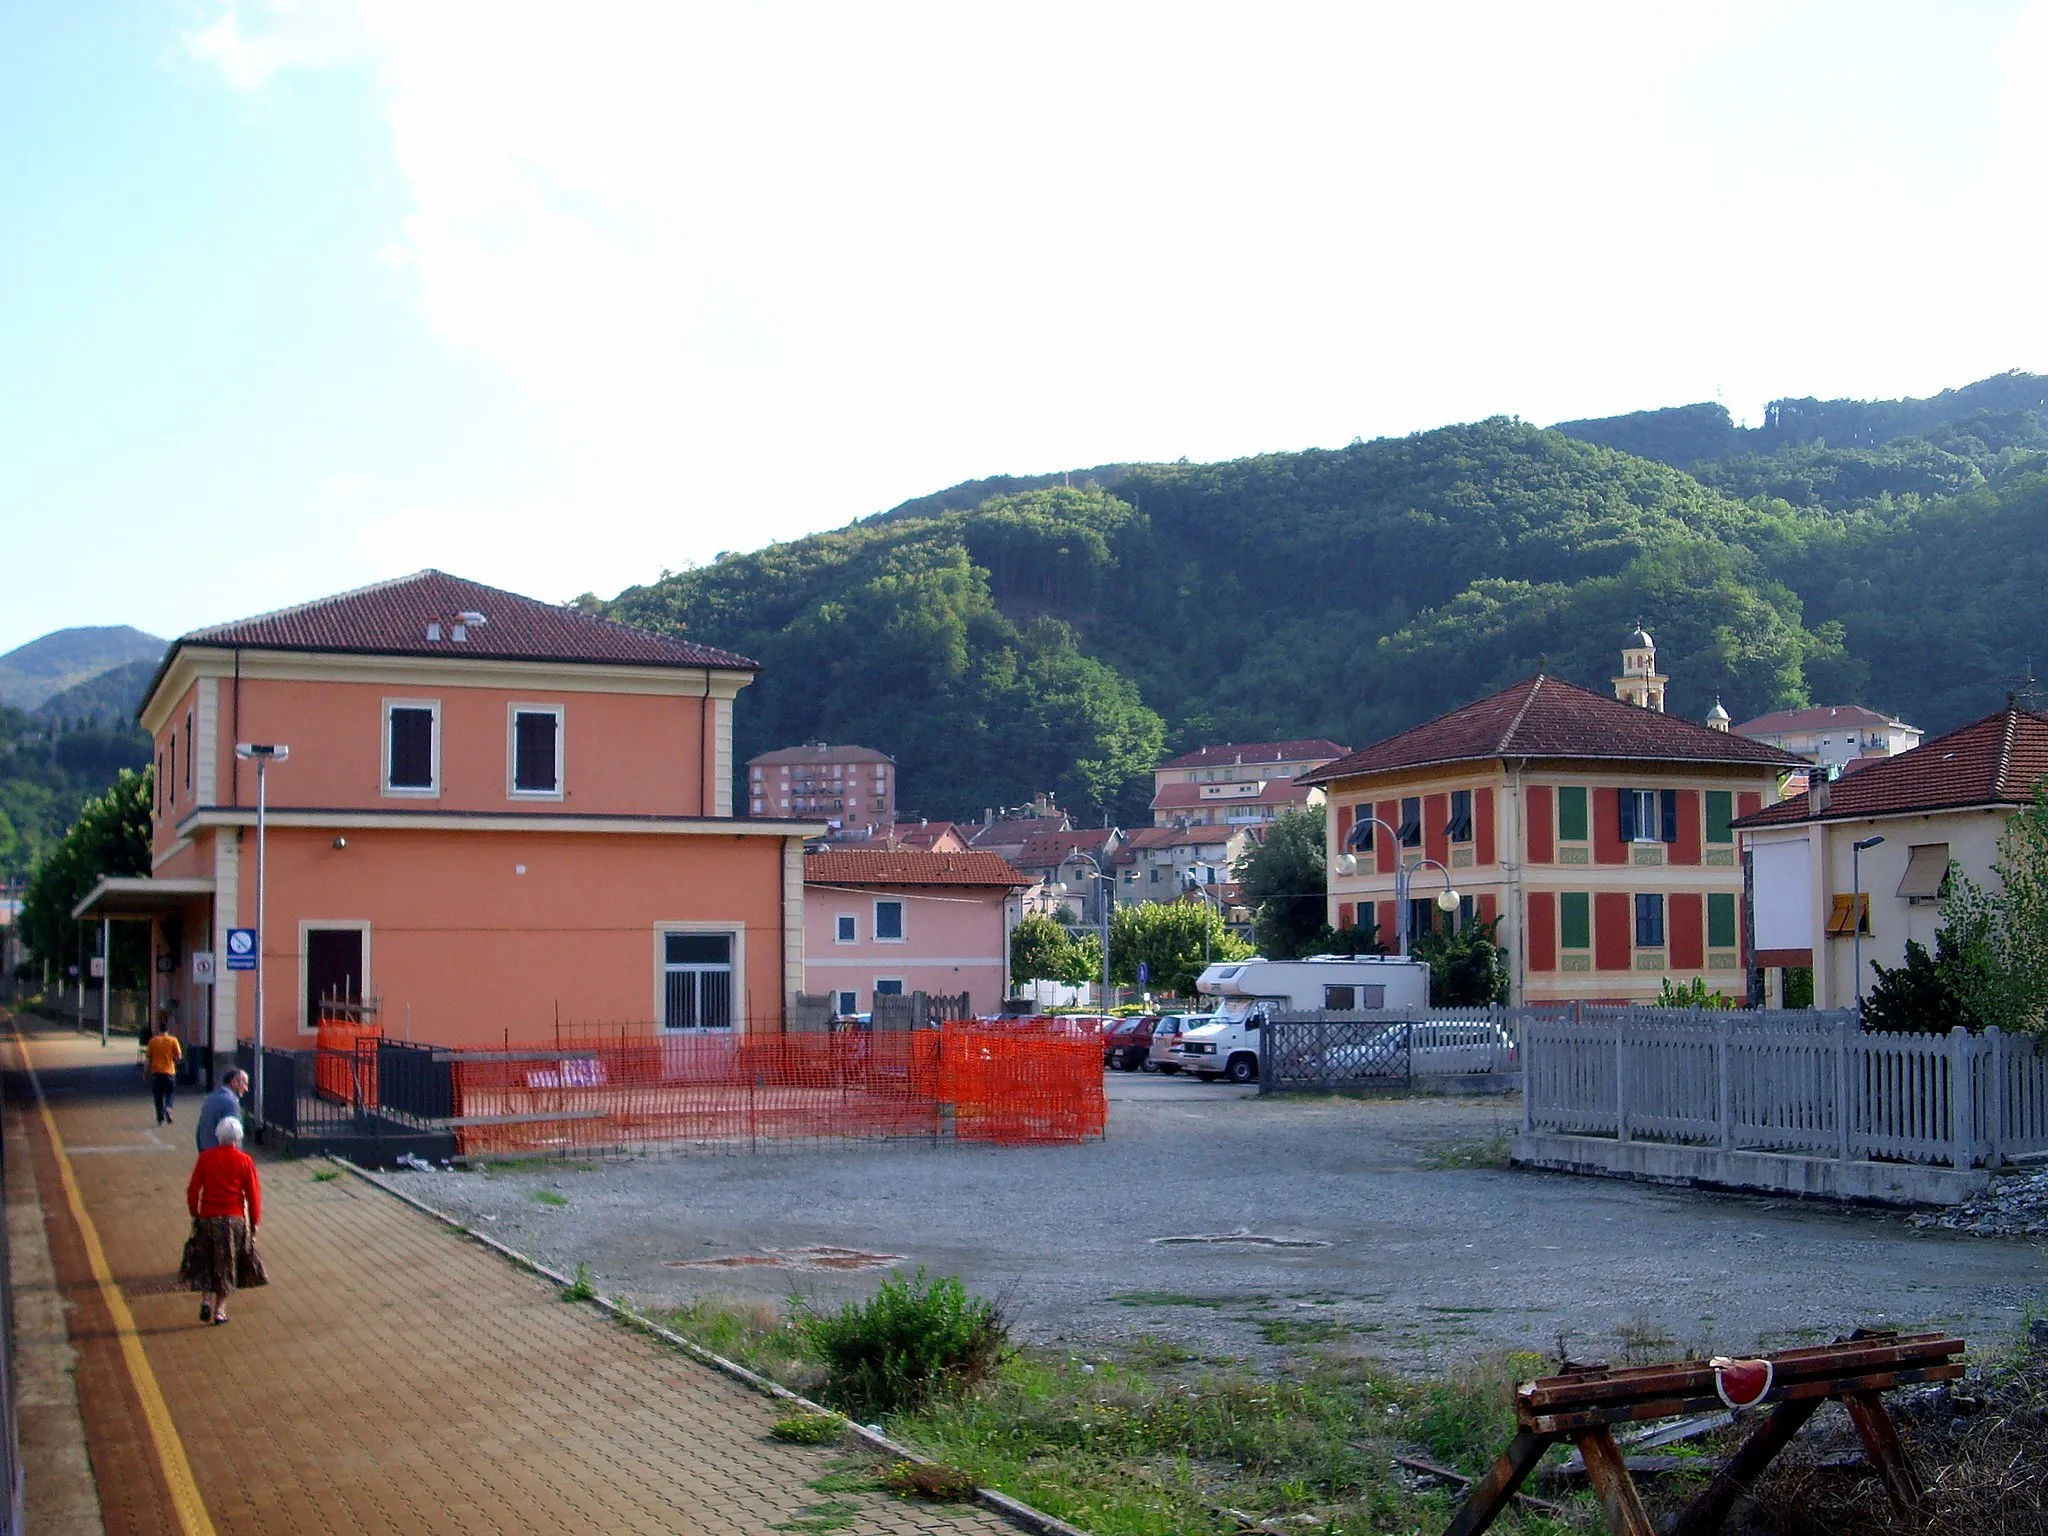 Photo showing: Rossiglione train station